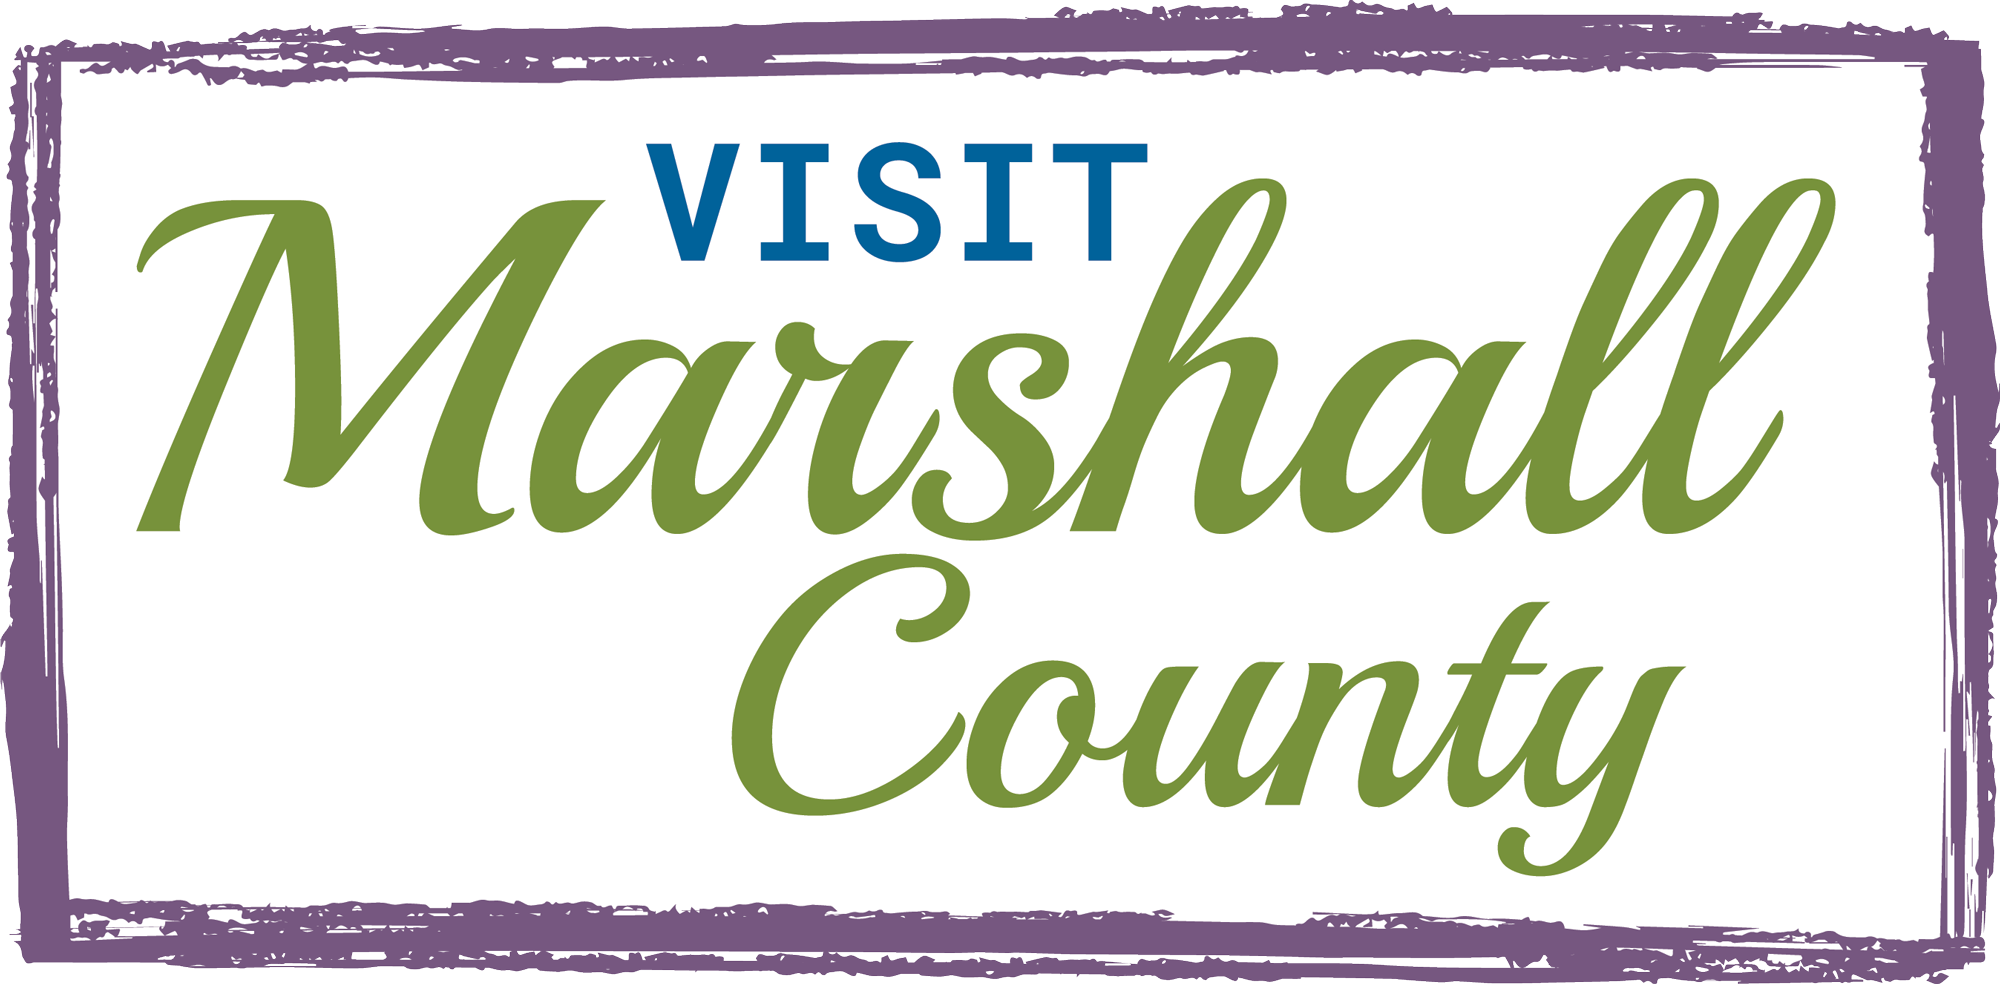 Visit Marshall County logo